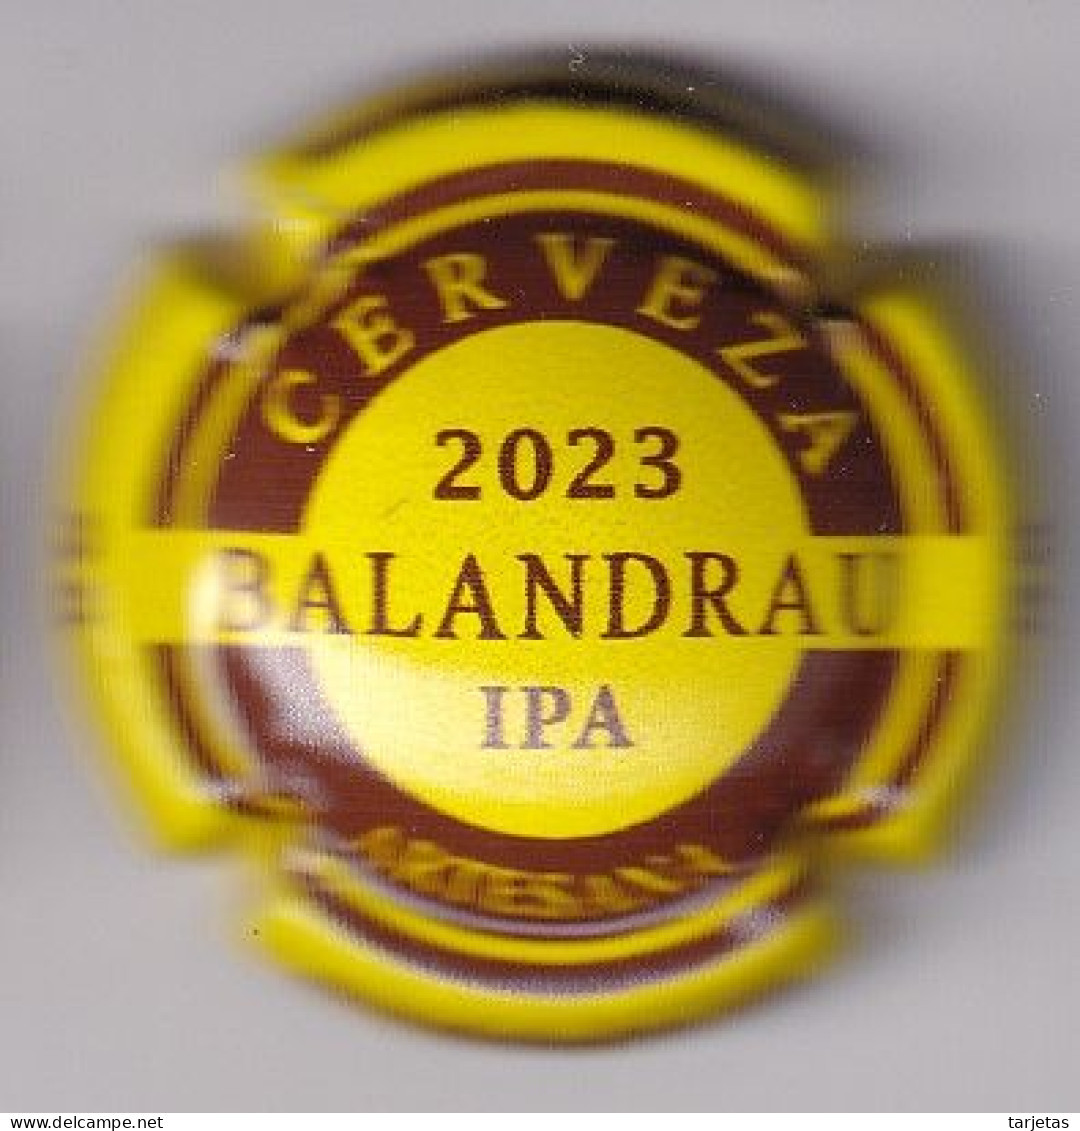 CHAPA DE CERVEZA ARTESANA BALANDRAU IPA 2023 (BEER-BIERE) CORONA - Cerveza